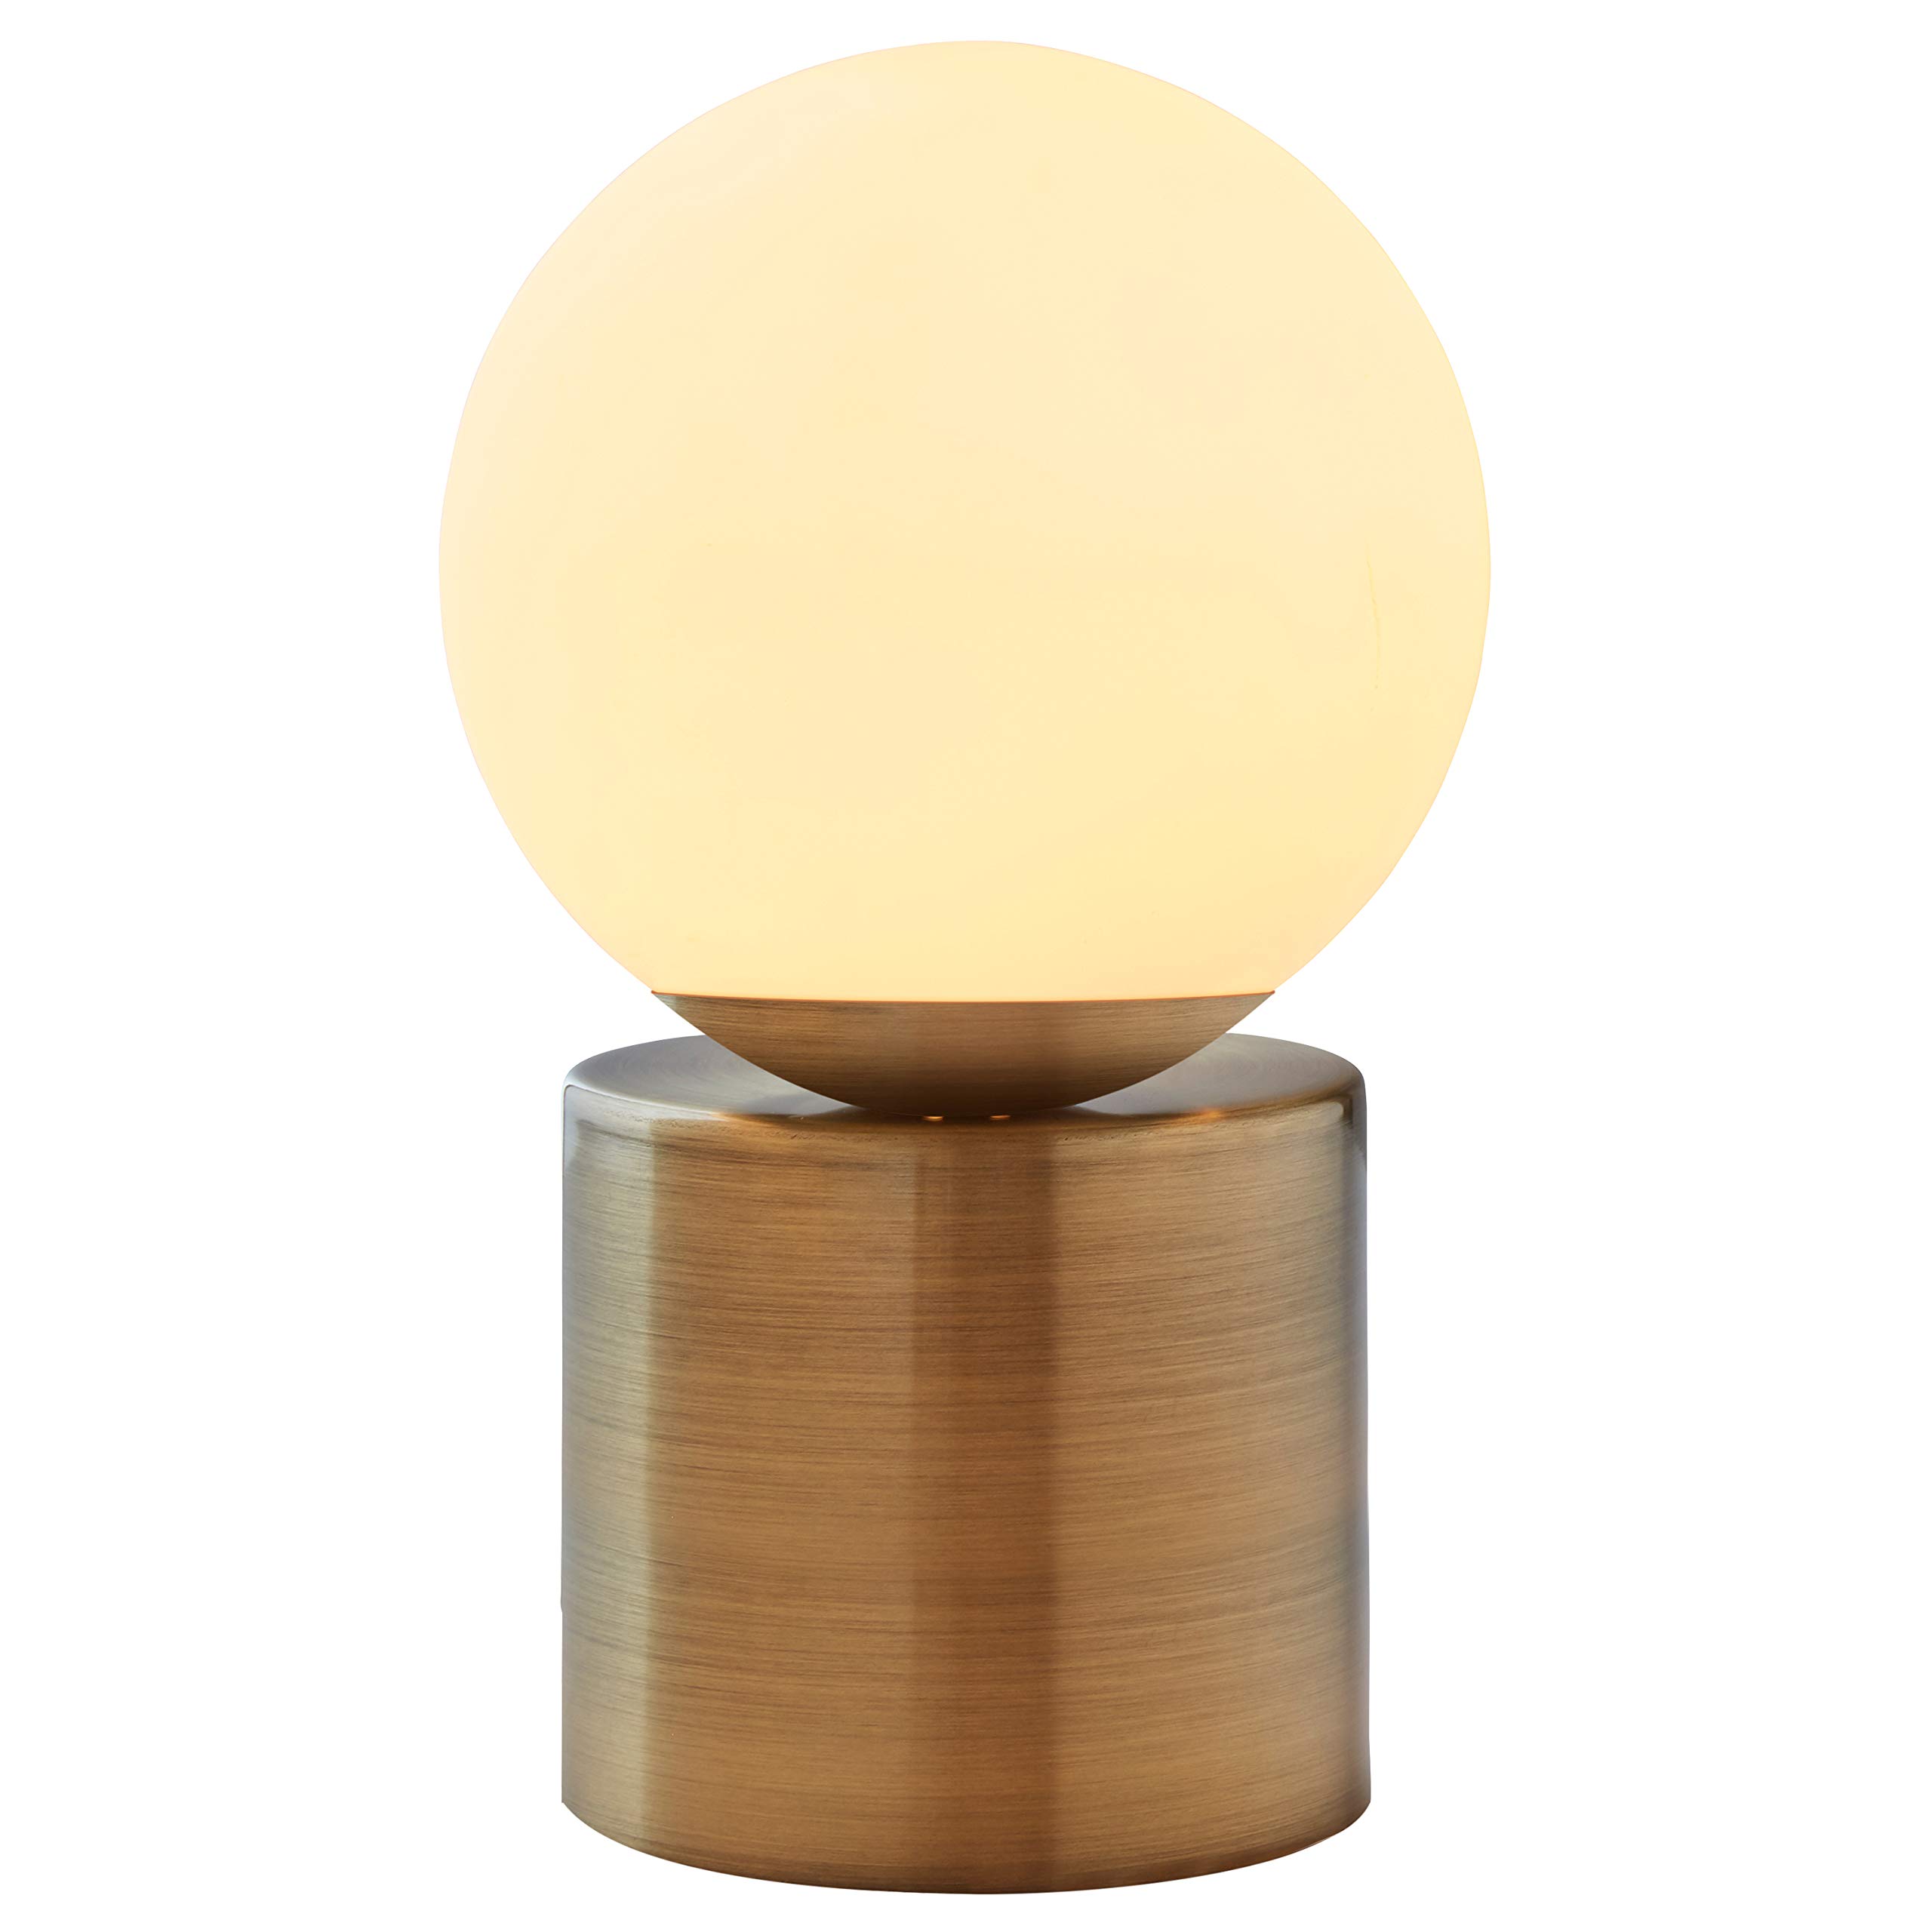 Amazon Brand – Rivet Modern Glass Globe Living Room Table Desk Lamp With LED Light Bulb - 7 x 10 Inches, Brass Finish